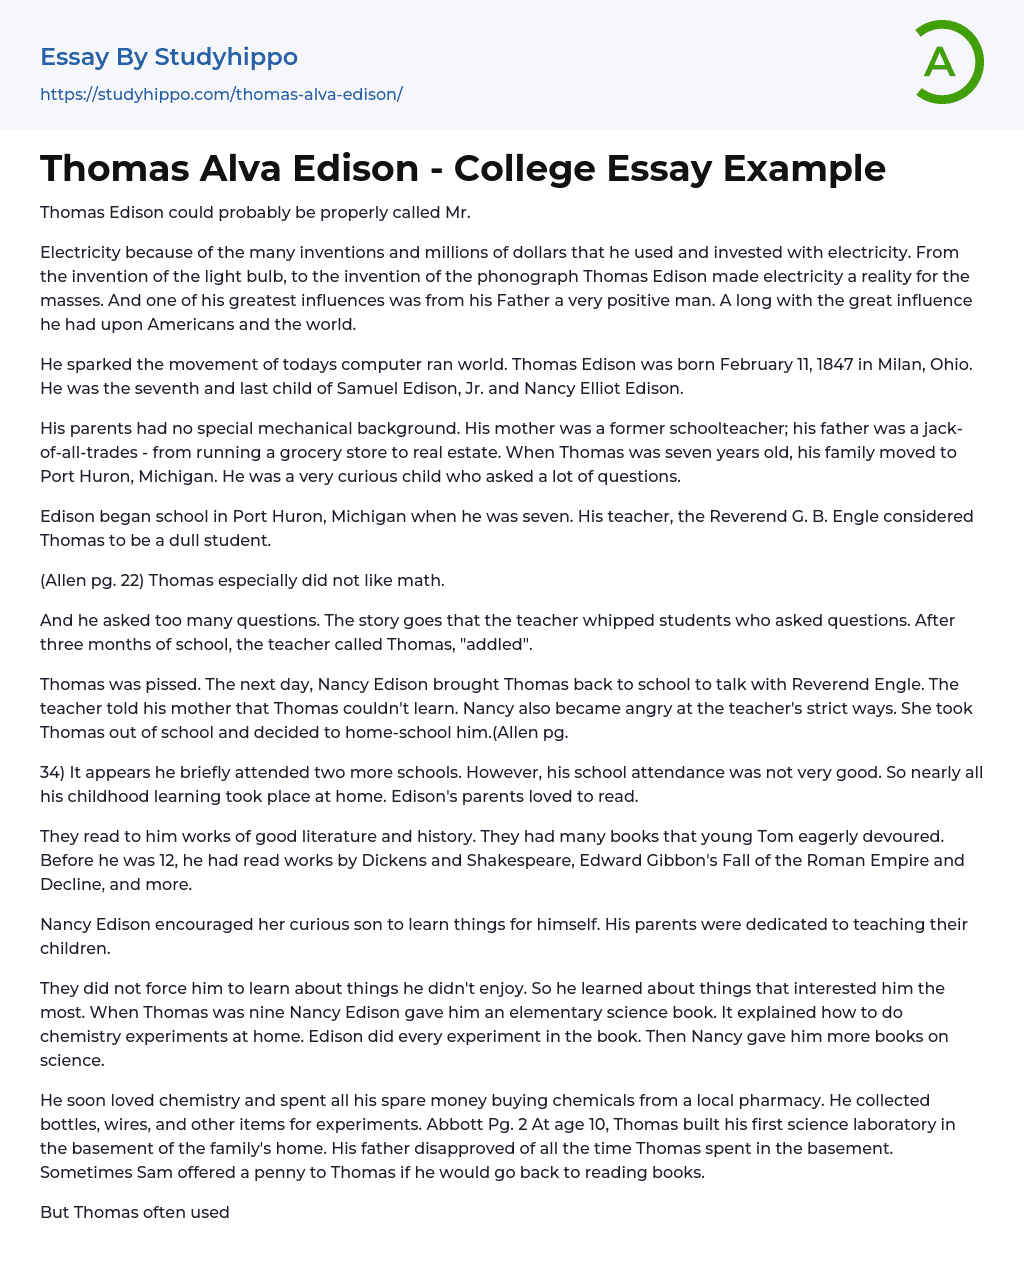 essay on thomas alva edison in 300 words